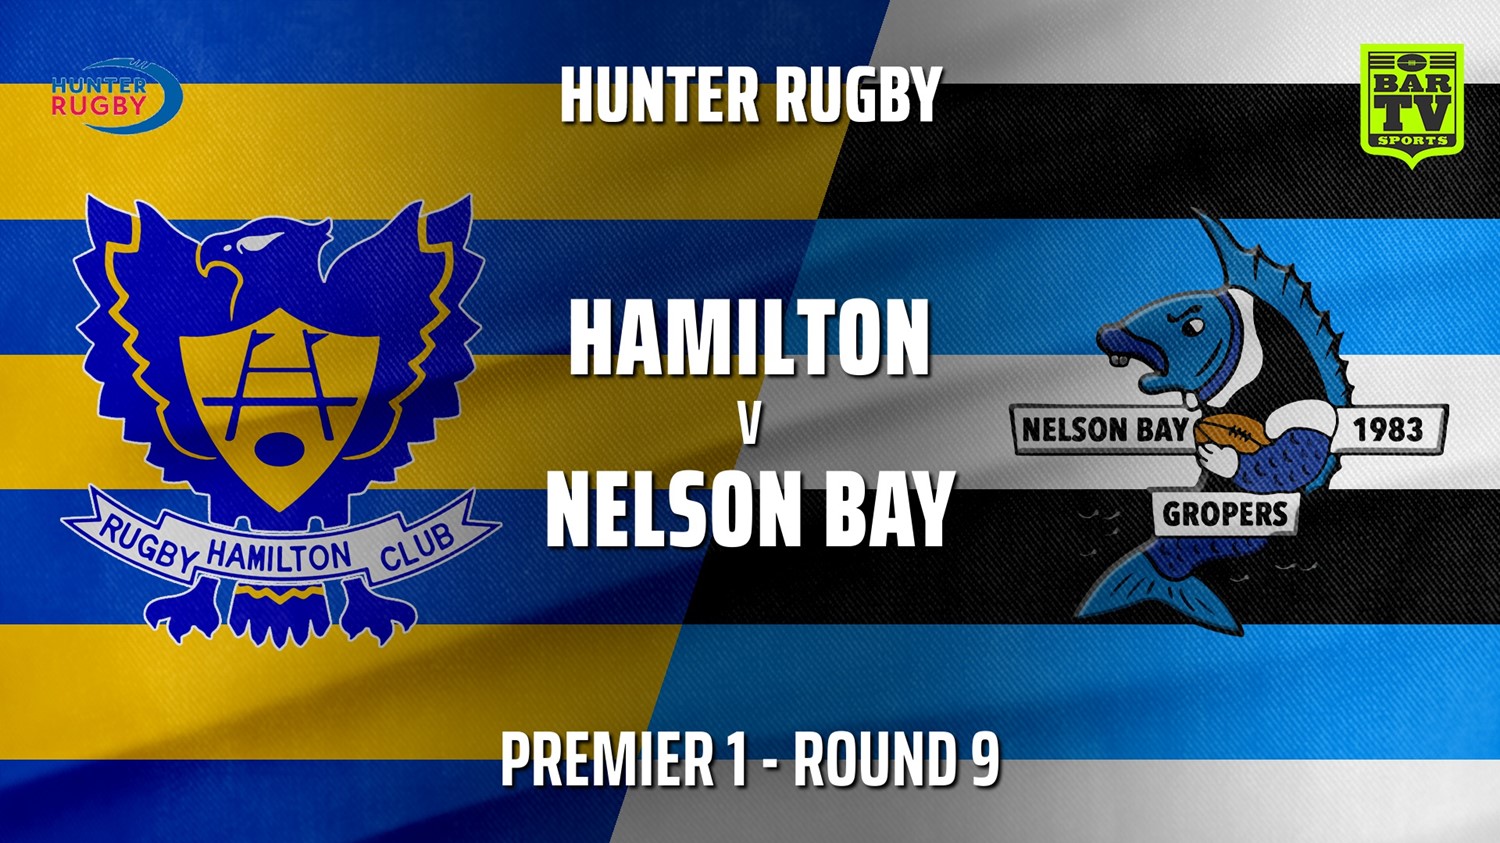 210619-Hunter Rugby Round 9 - Premier 1 - Hamilton Hawks v Nelson Bay Gropers Minigame Slate Image